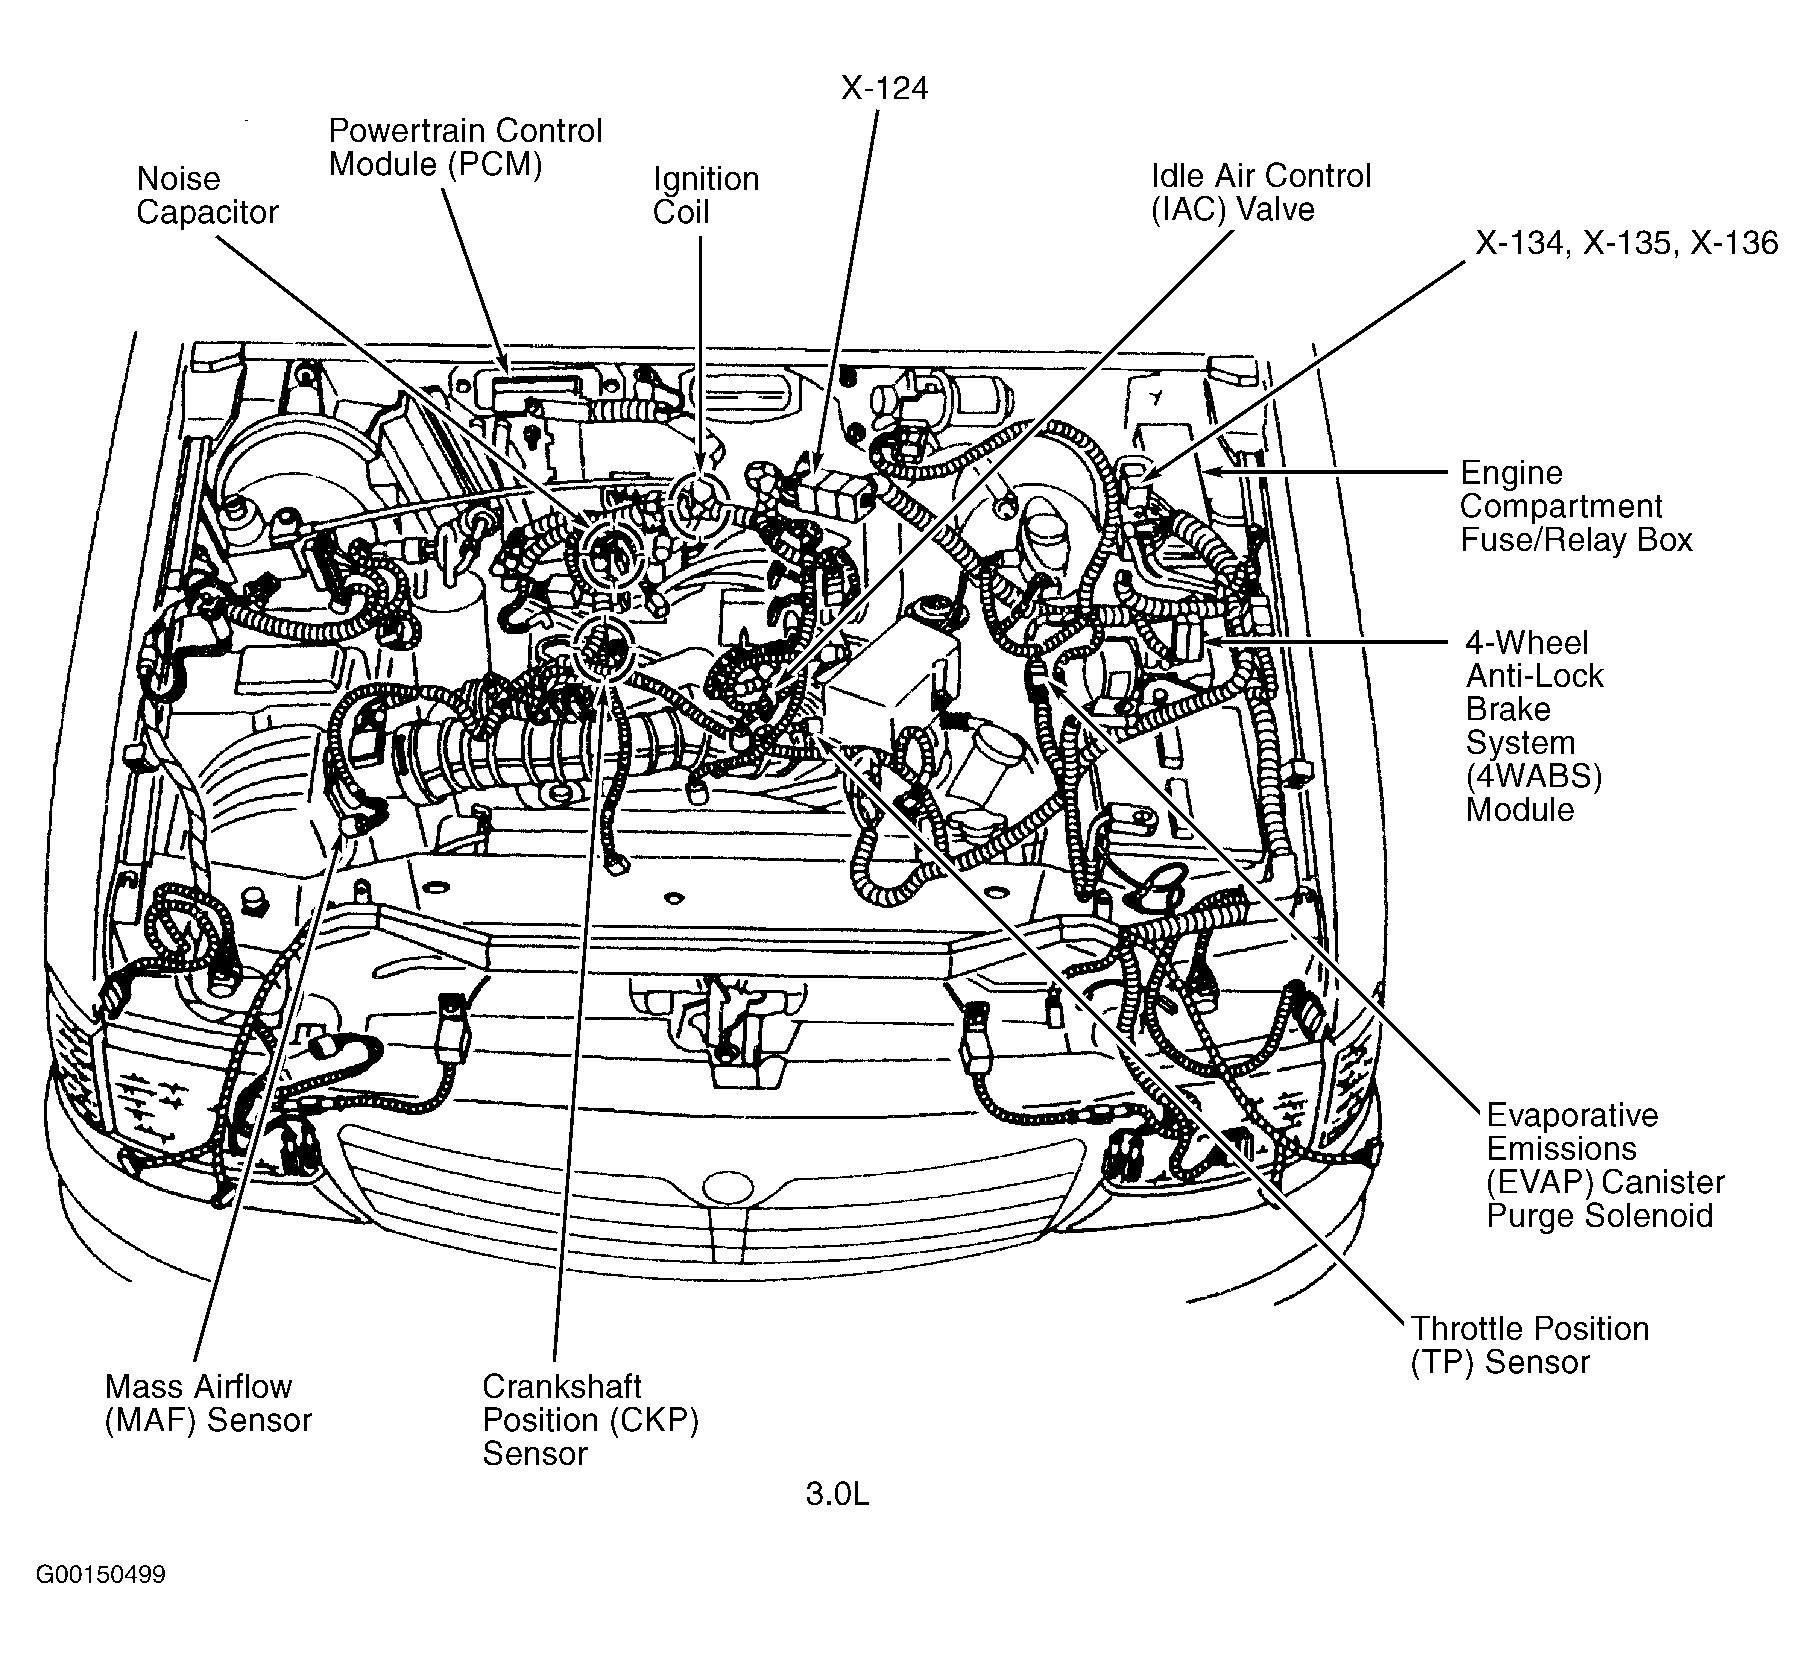 1992 toyota Camry Parts Diagram 1992 toyota Pickup 3 0l Parts Diagram Wiring Diagram today Of 1992 toyota Camry Parts Diagram